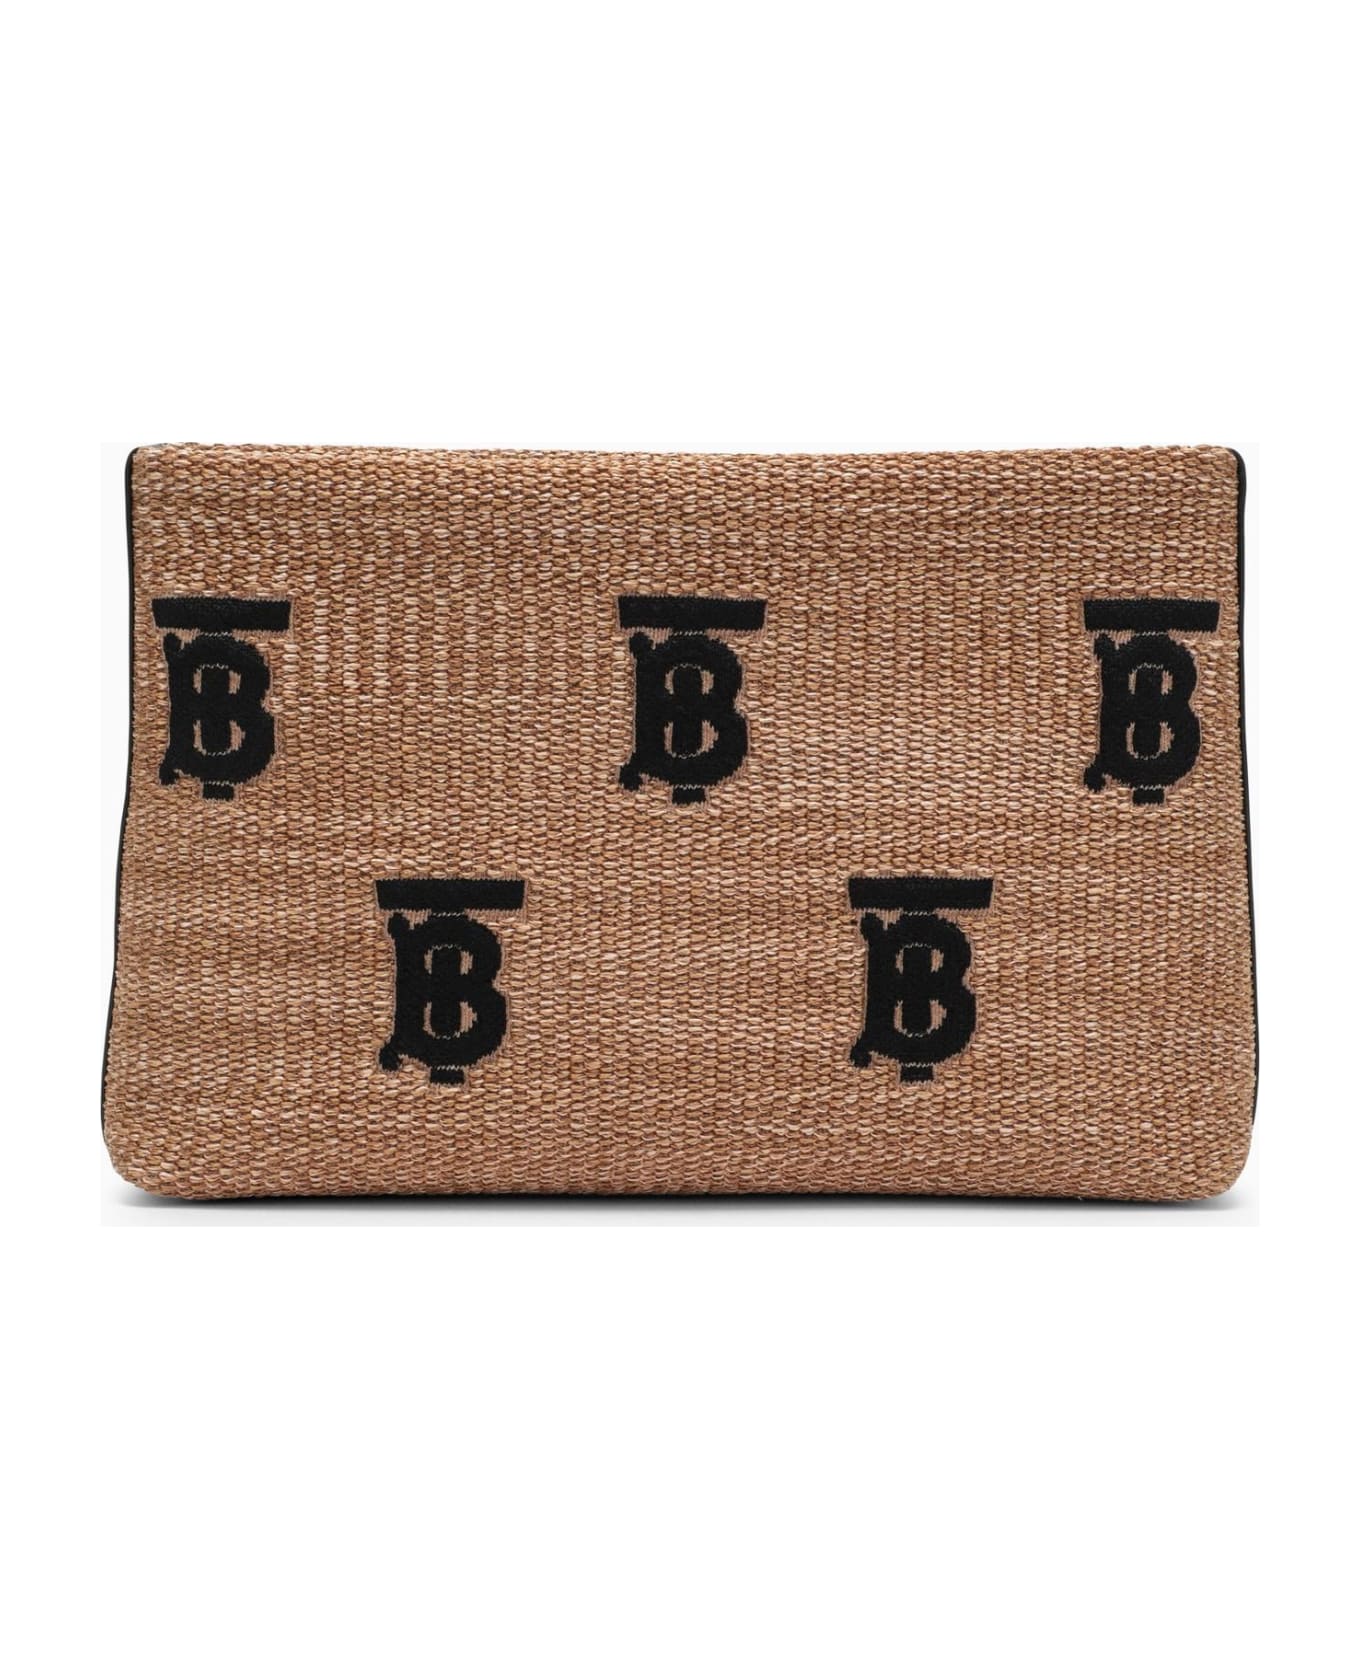 Burberry Beige Raffia Envelope With Monogram - Natural/black tb emb クラッチバッグ